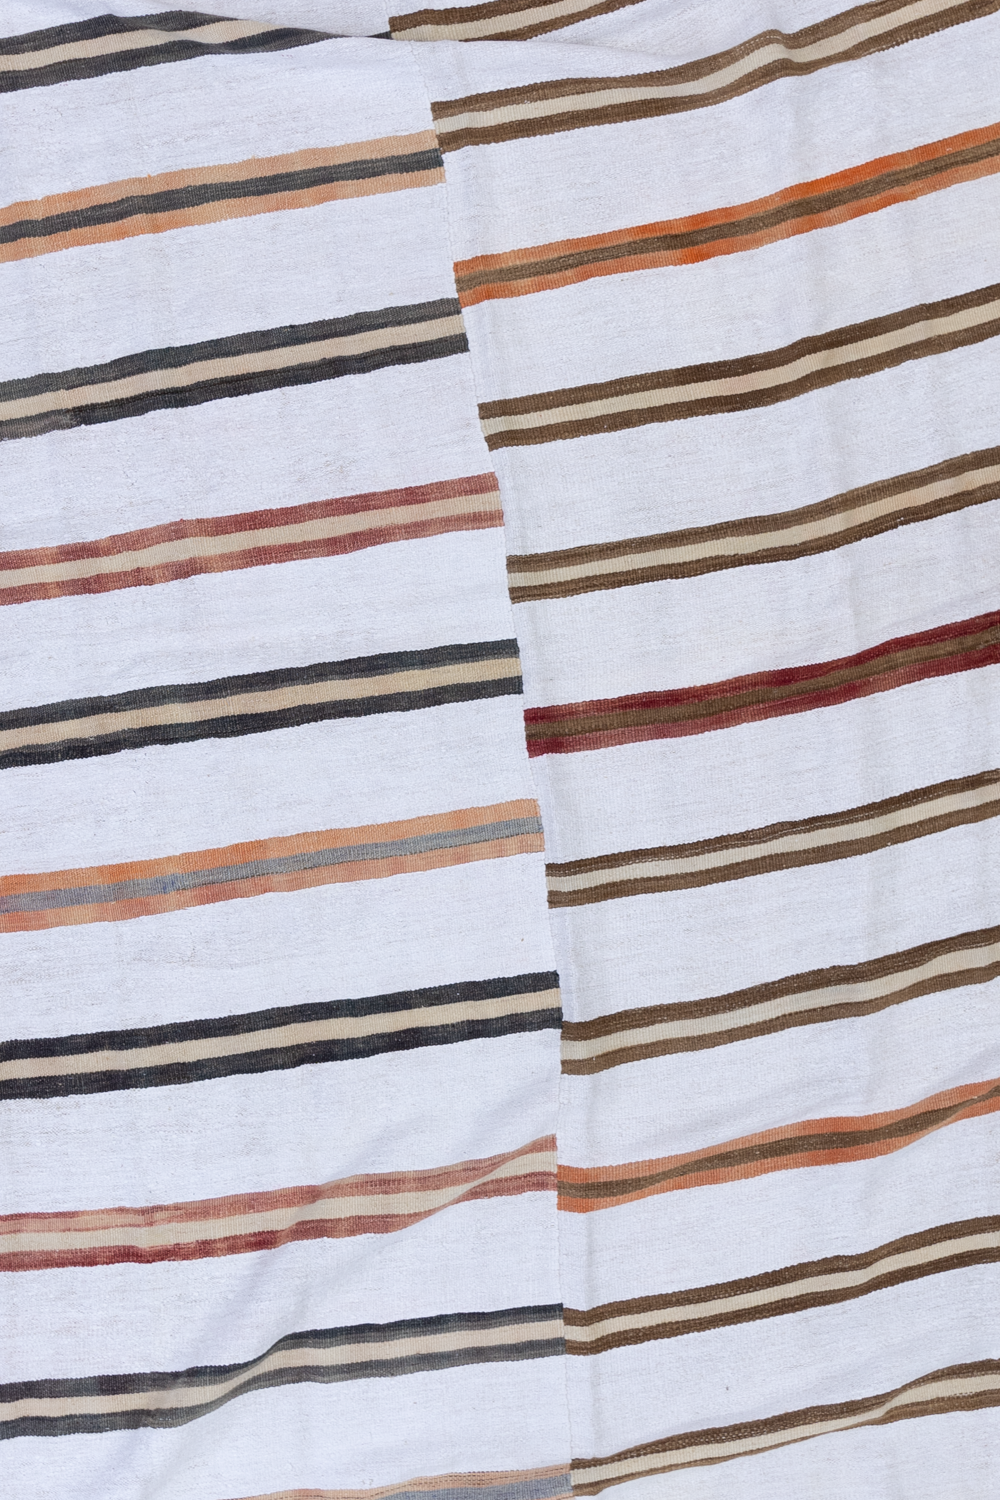 Oversize Vintage Striped Turkish Hemp Rug